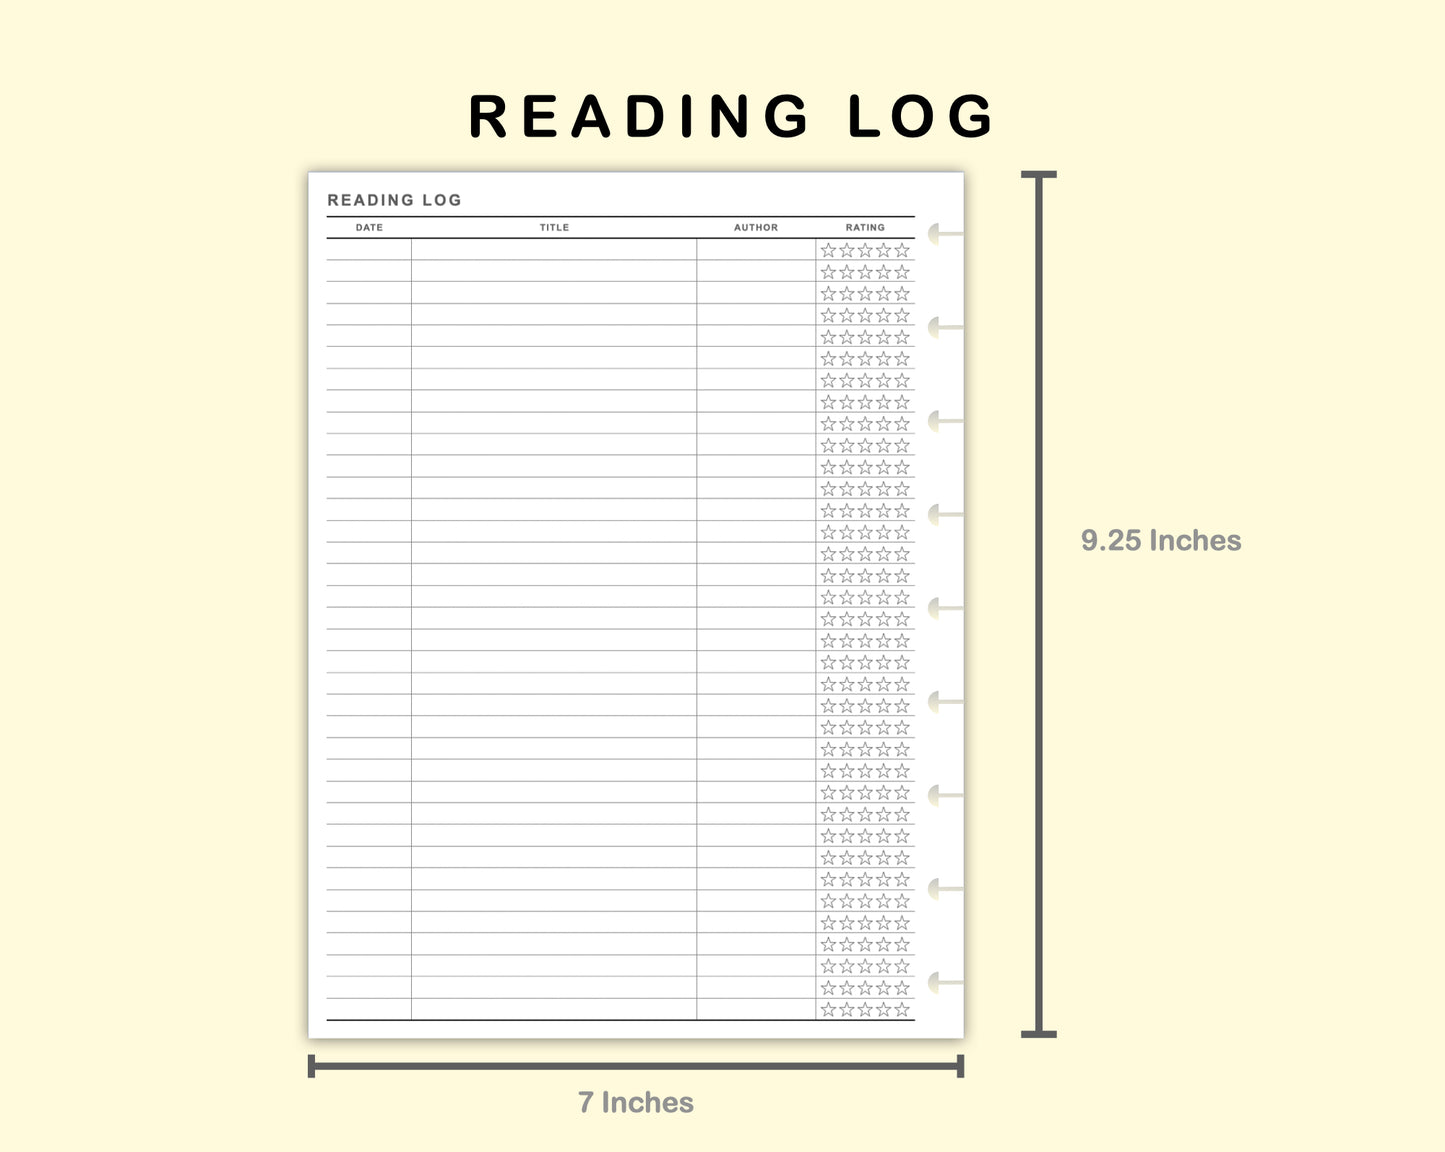 Classic HP Inserts - Reading Log